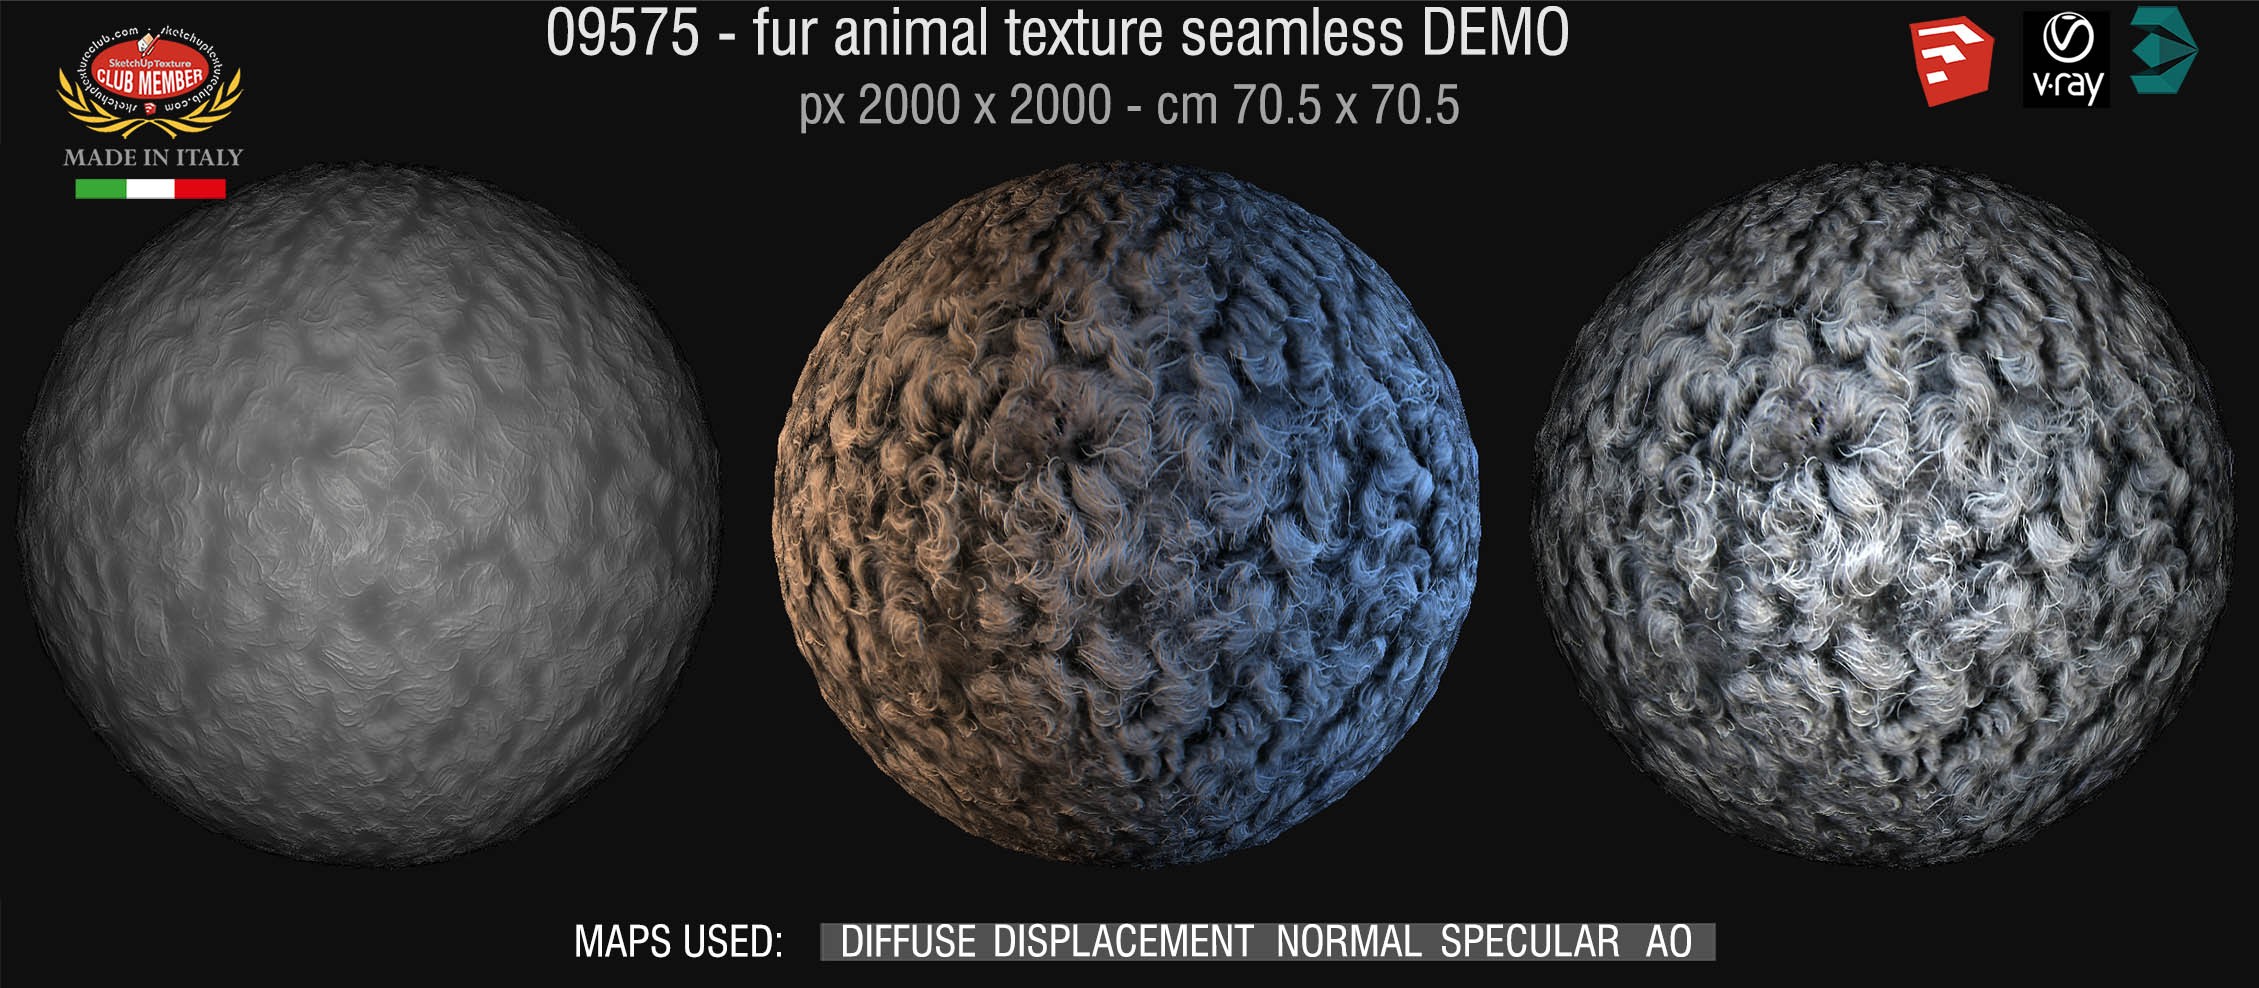 09577 HR fake fur animal texture seamless + maps DEMO